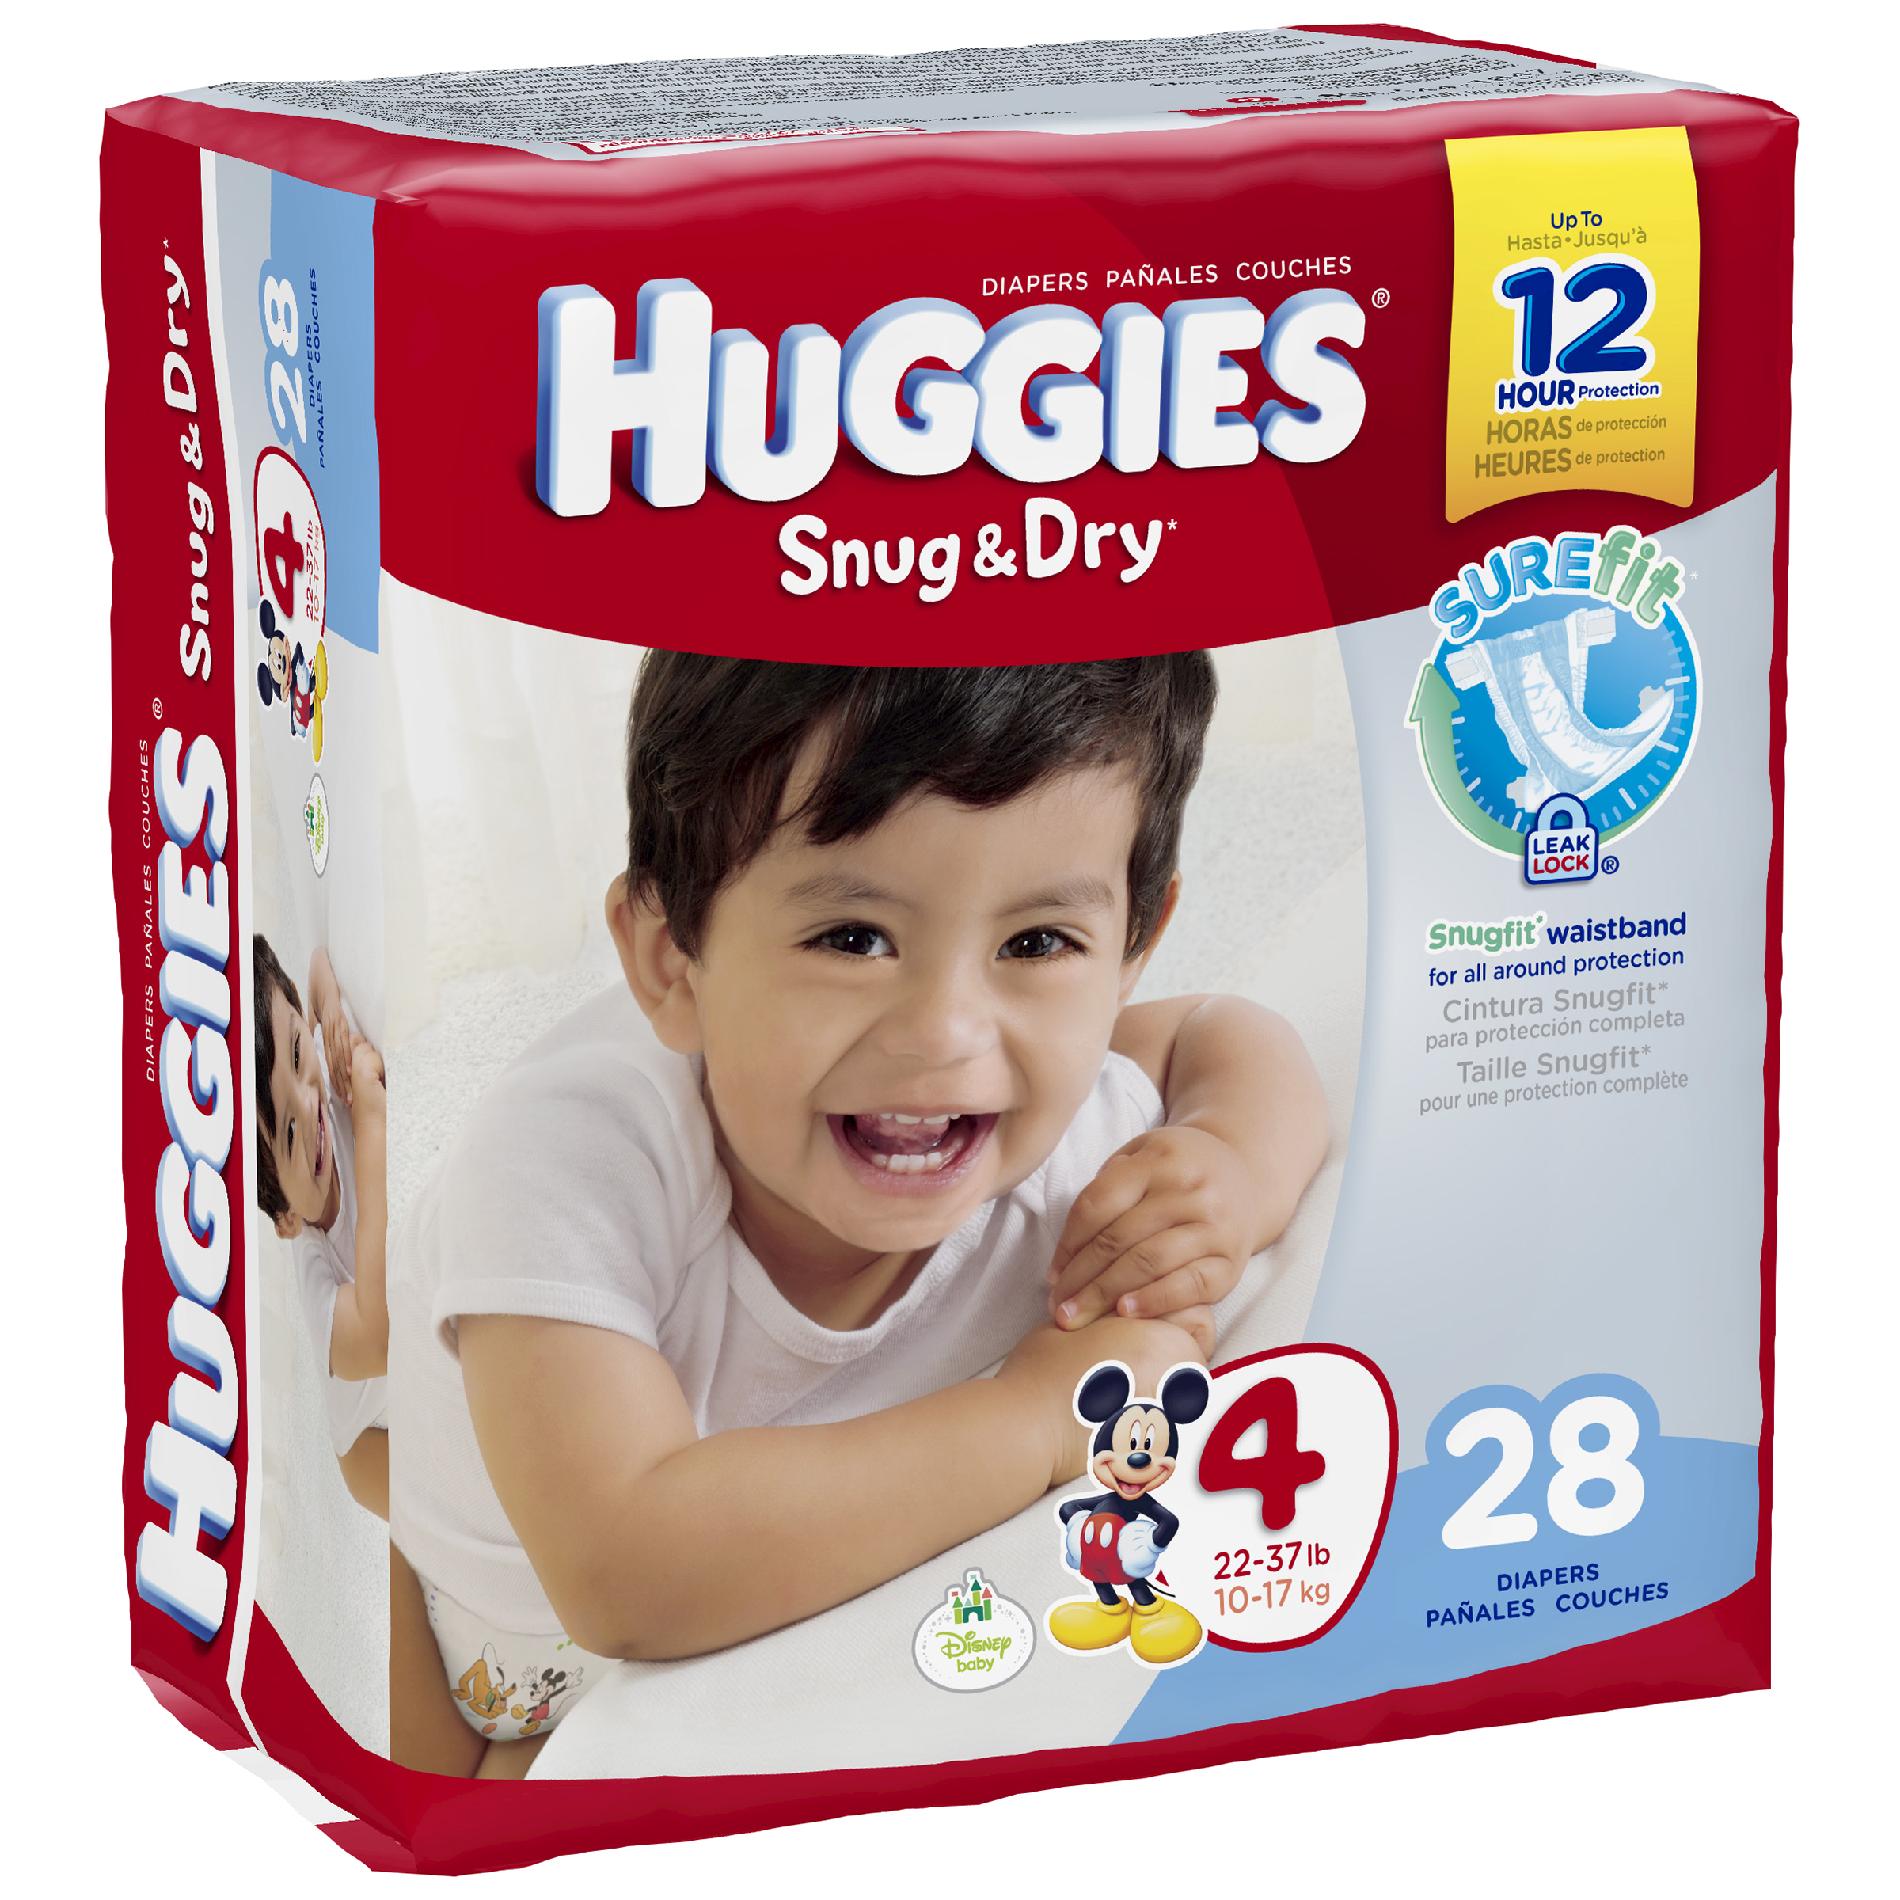 UPC 036000406696 - Huggies Snug & Dry, Leak Lock Diapers ...